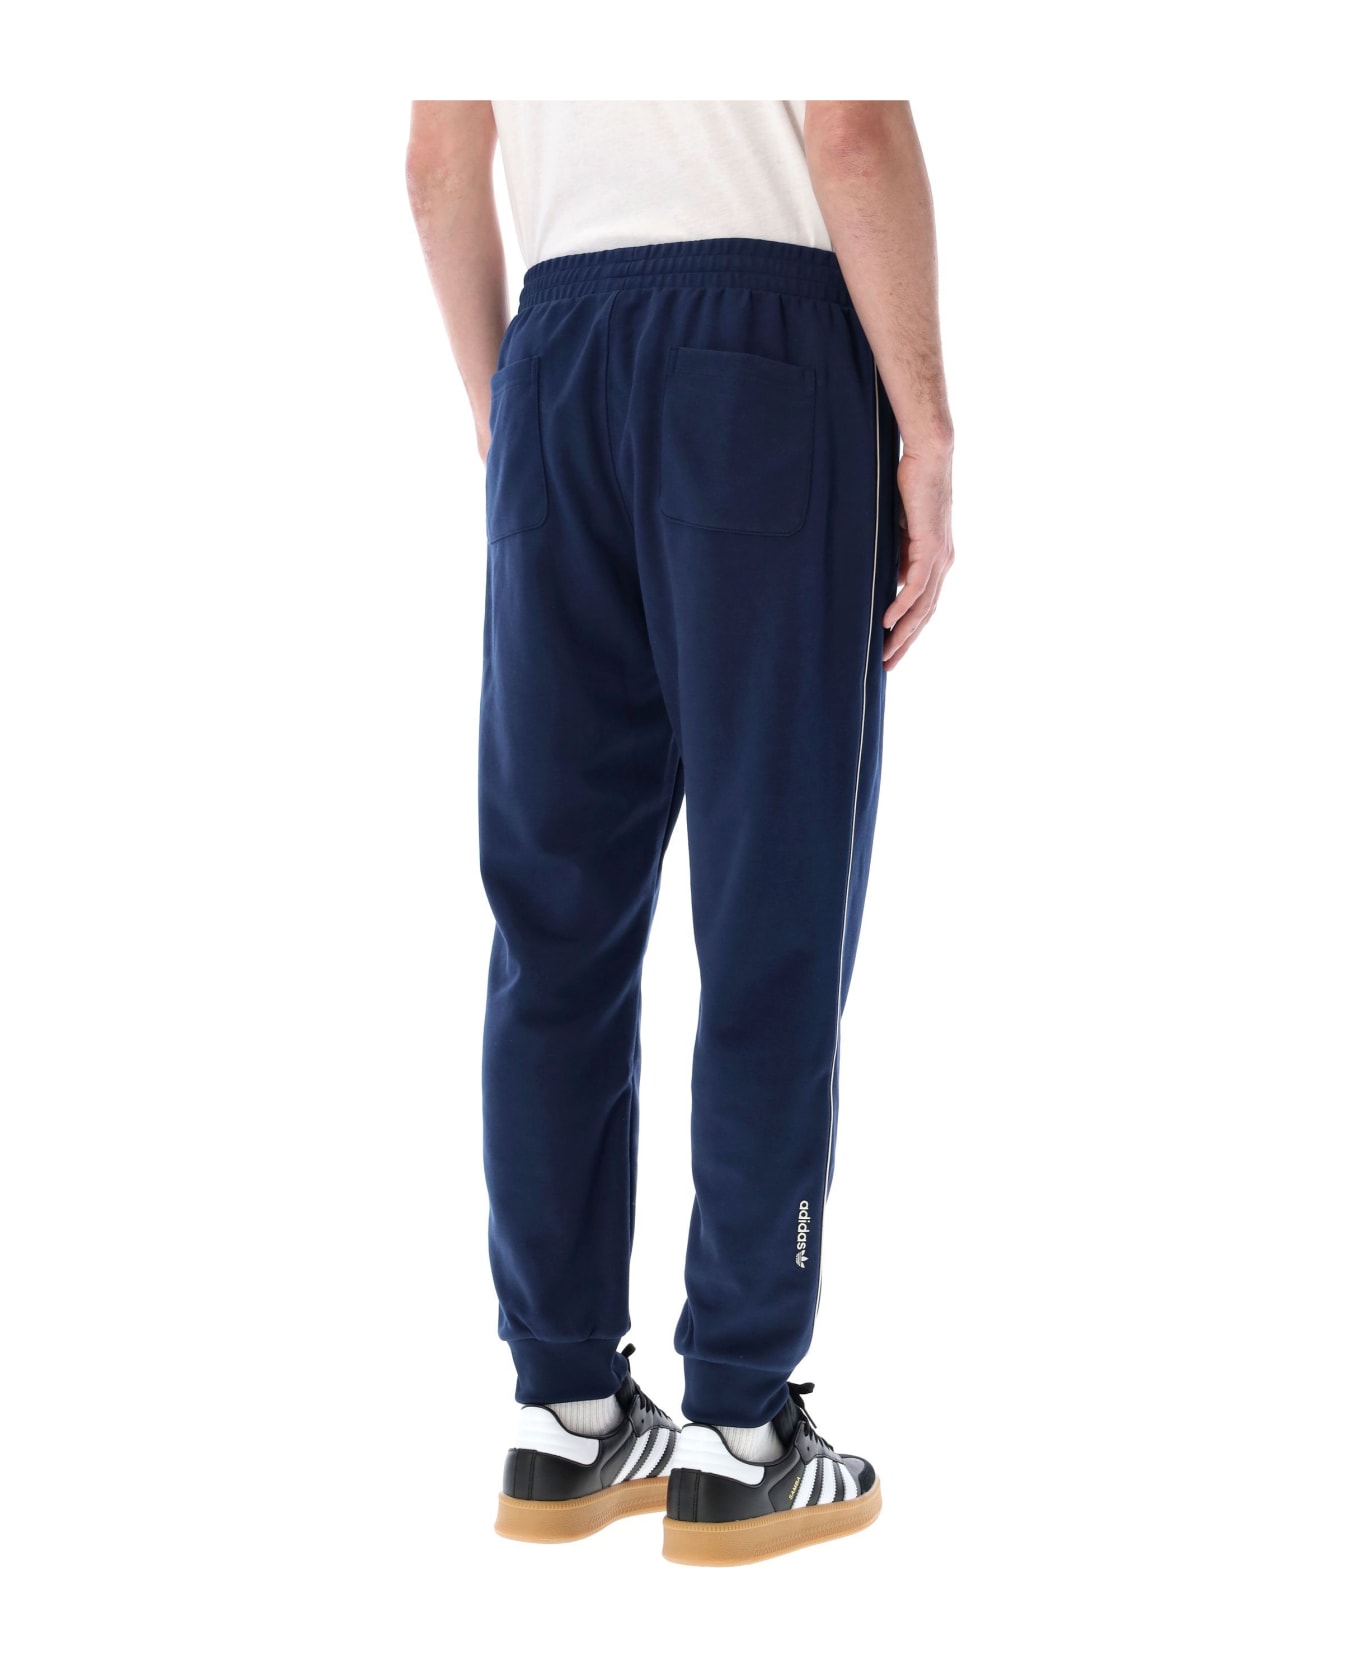 Adidas Originals Poly Track Pants - NAVY CREAM スウェットパンツ